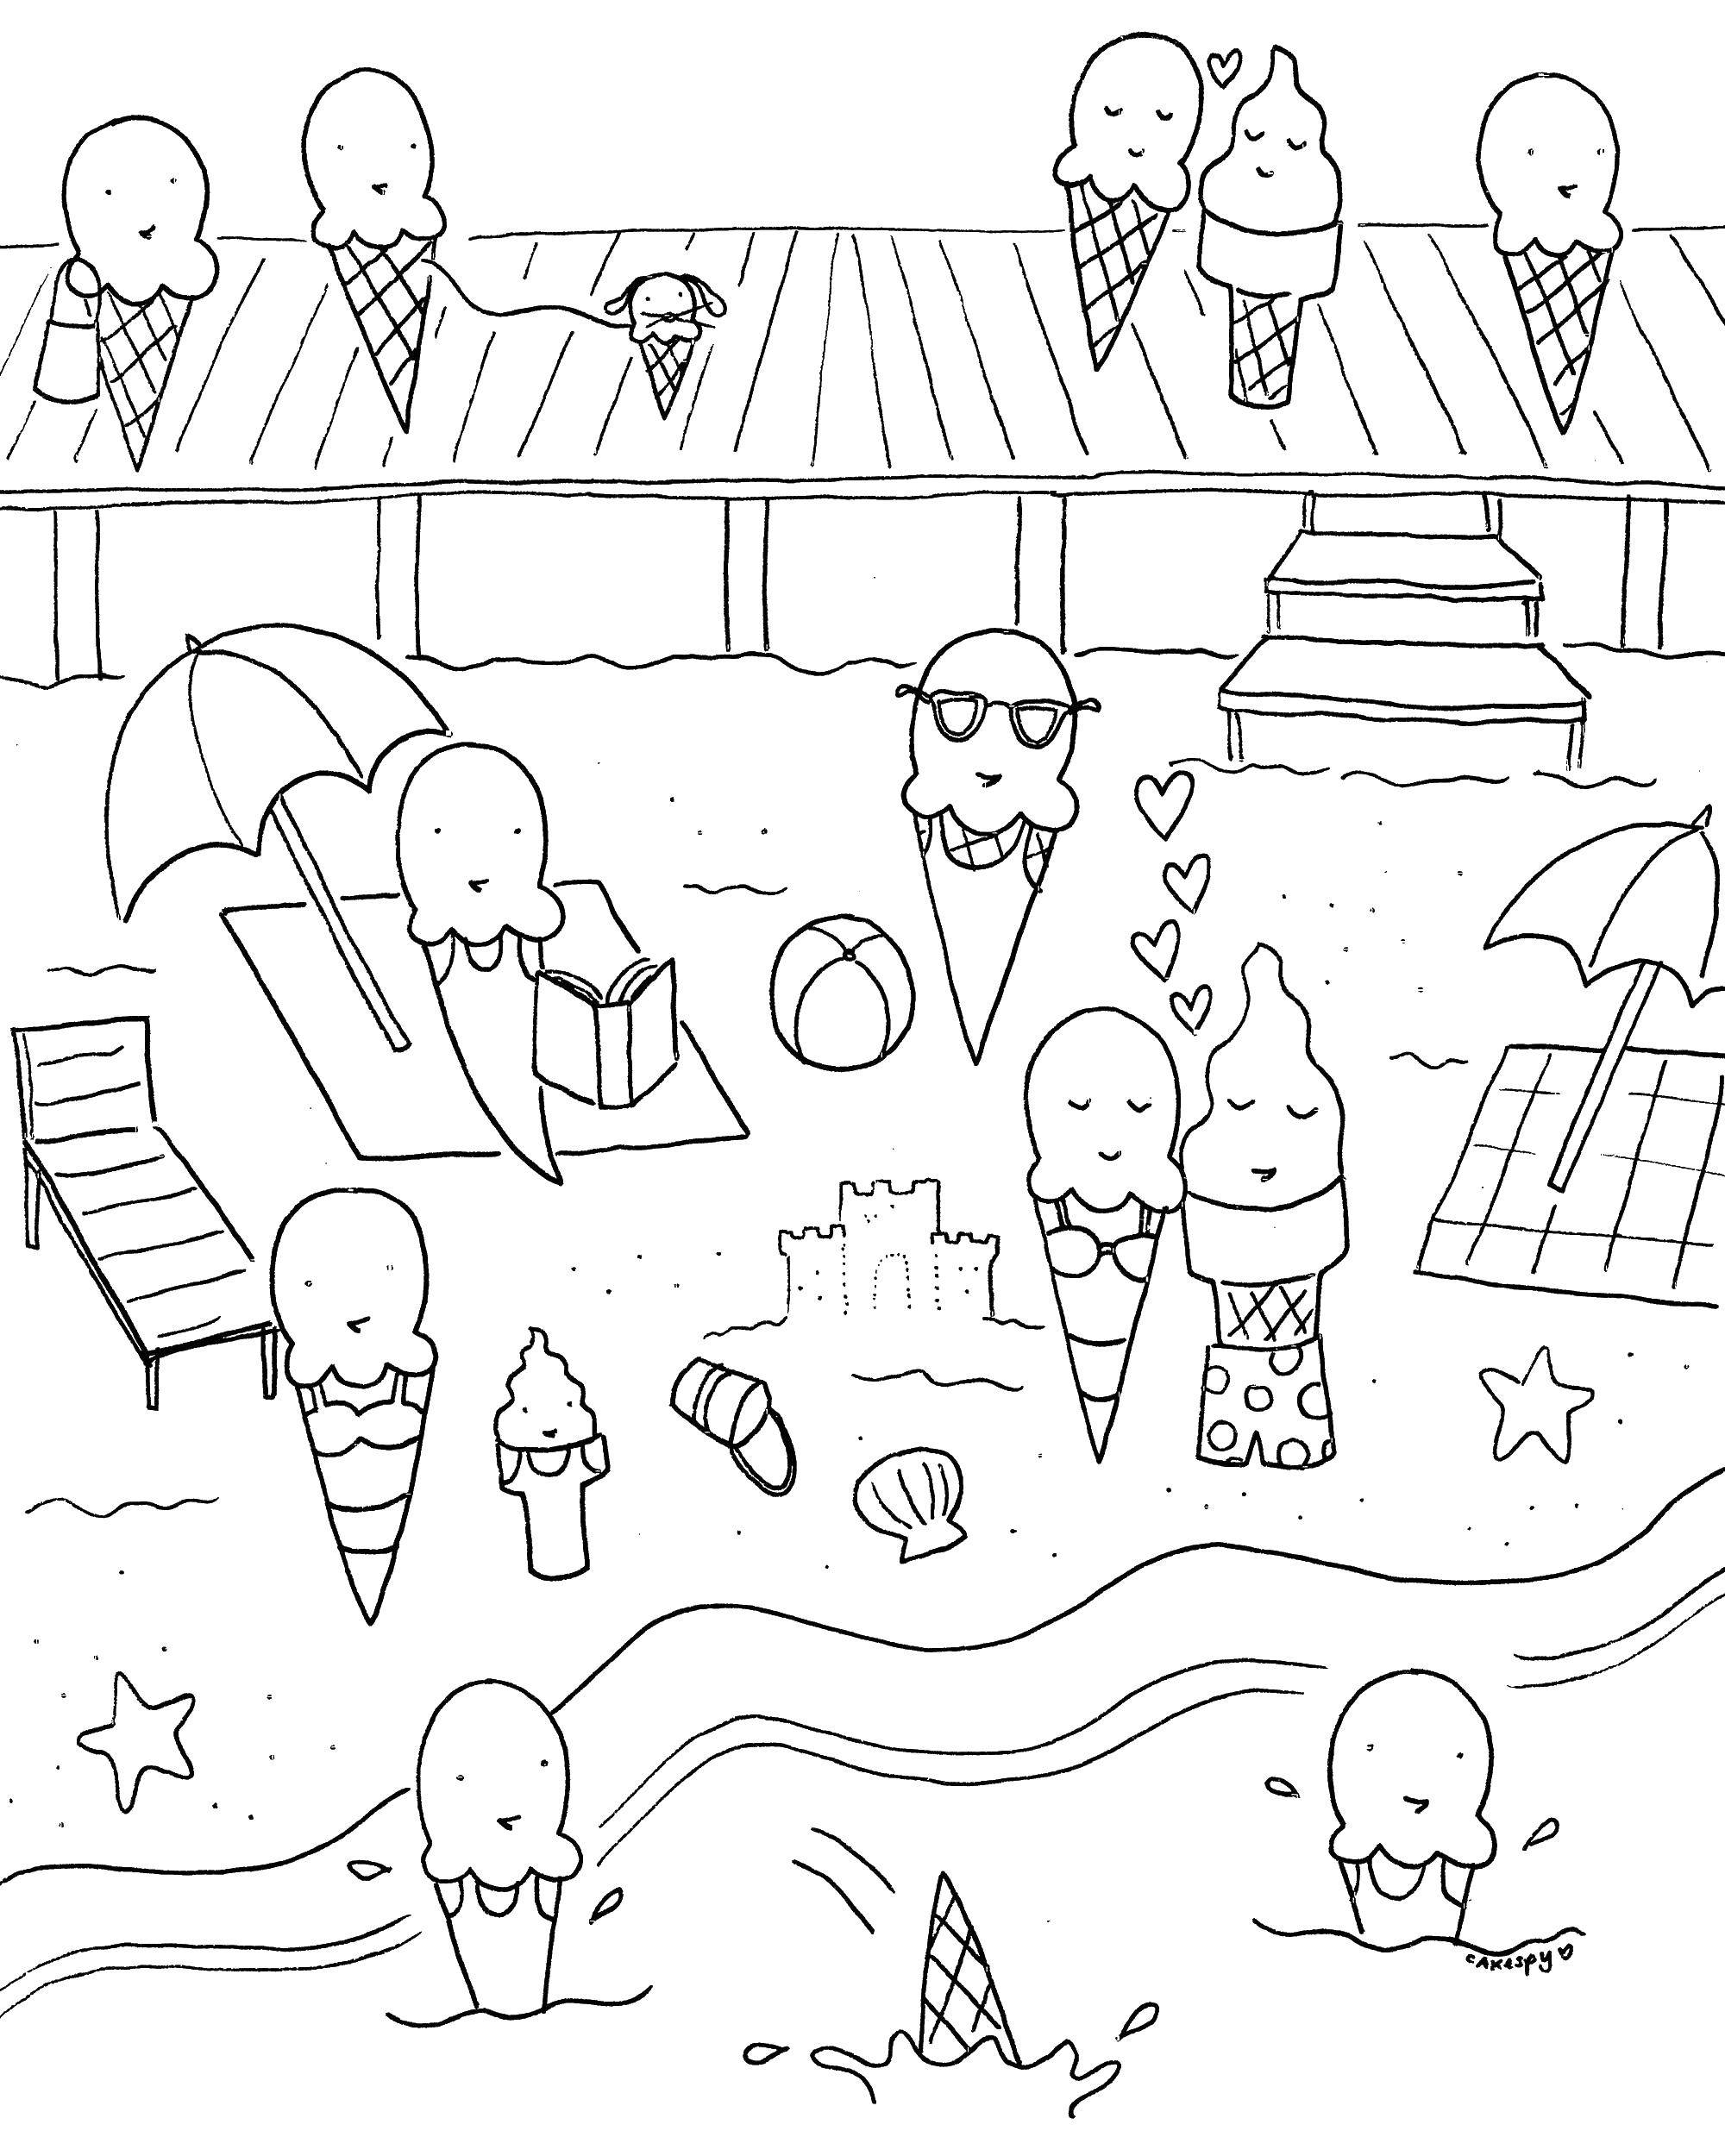 Coloring Ice cream on the beach. Category Summer fun. Tags:  summer, ice cream, beach, sand.